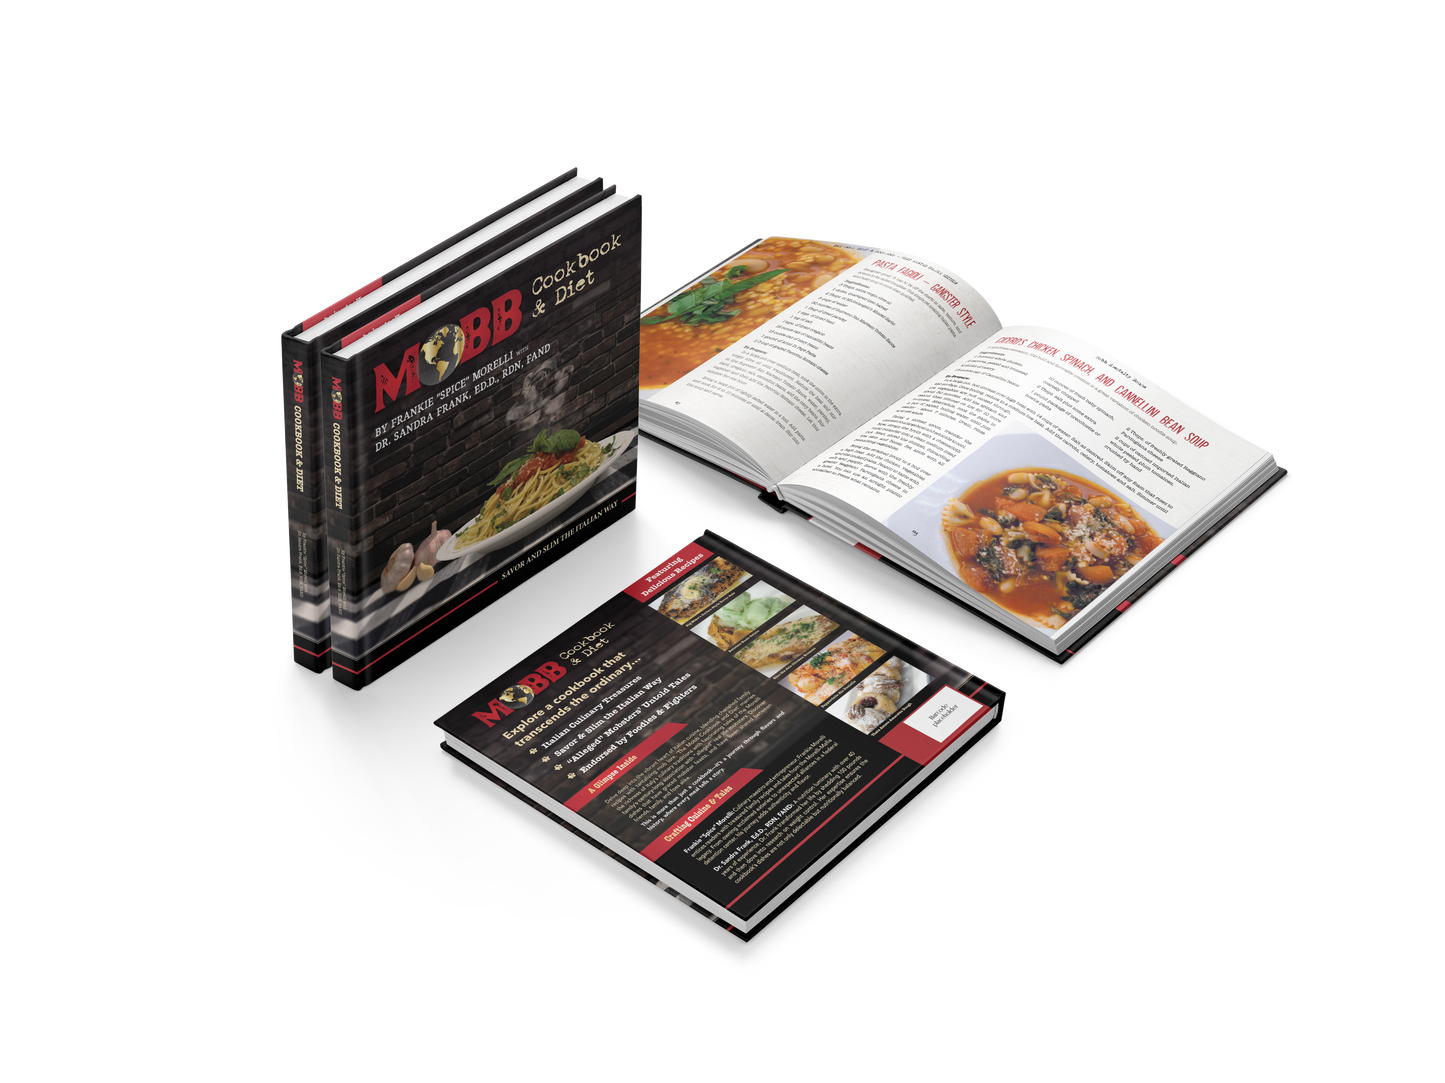 The MOBB Cookbook & Diet